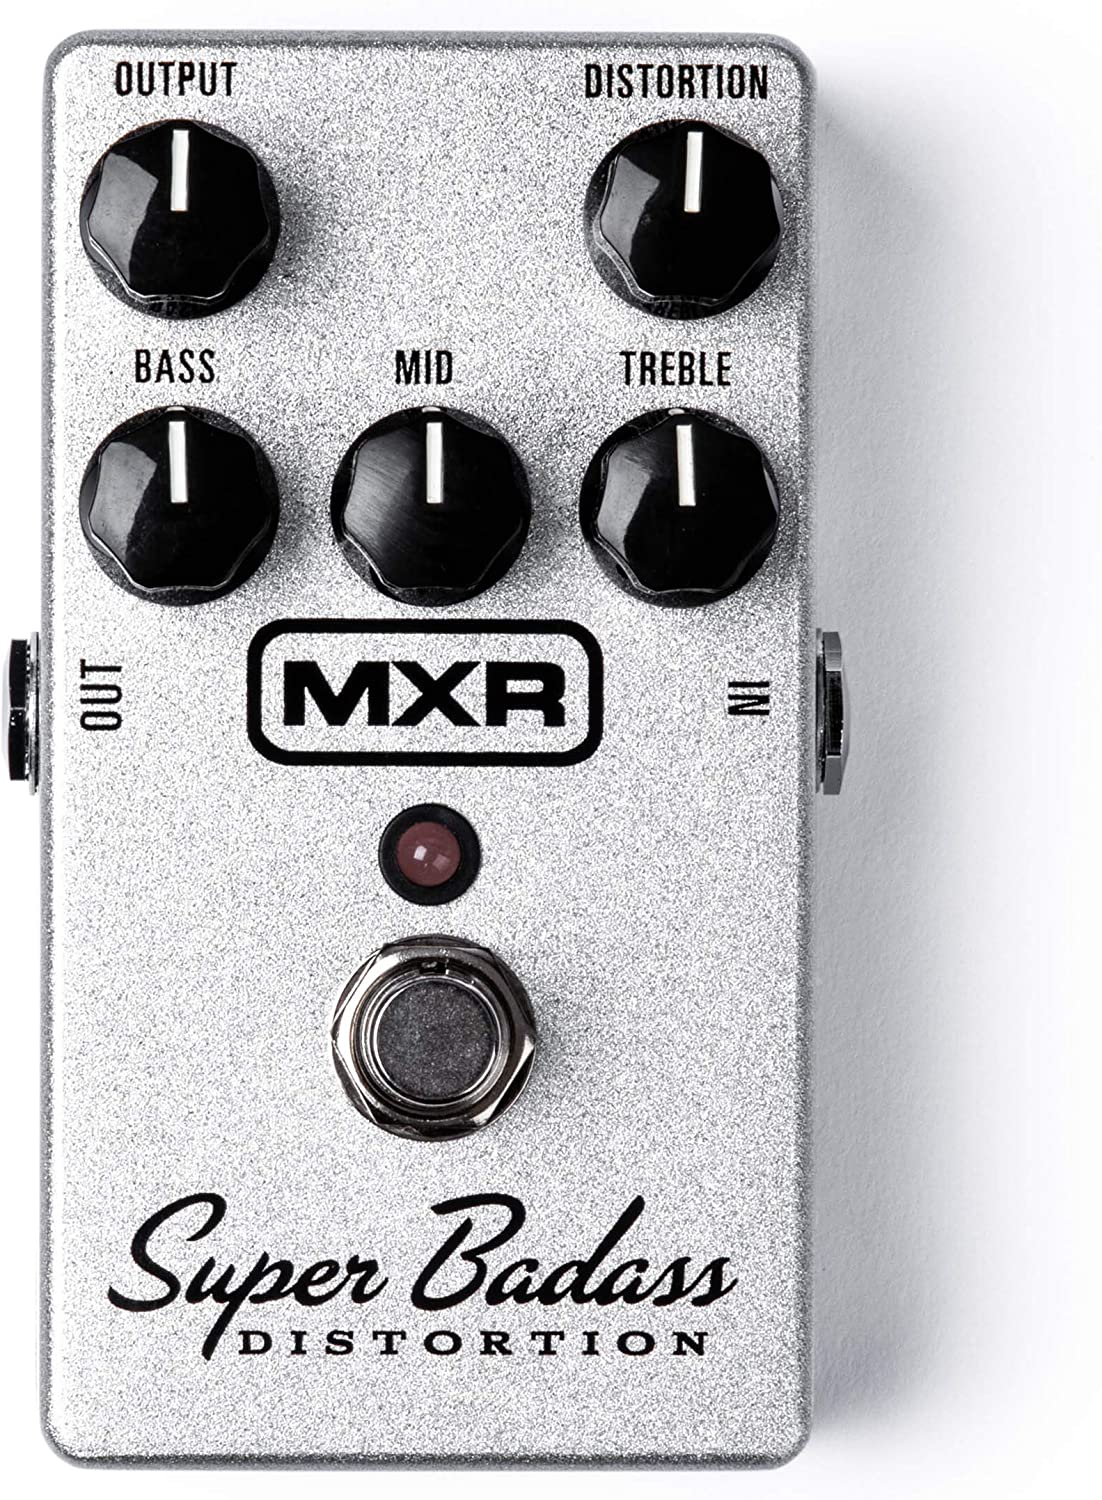 MXR Super Badass Distortion Pedal on a white background